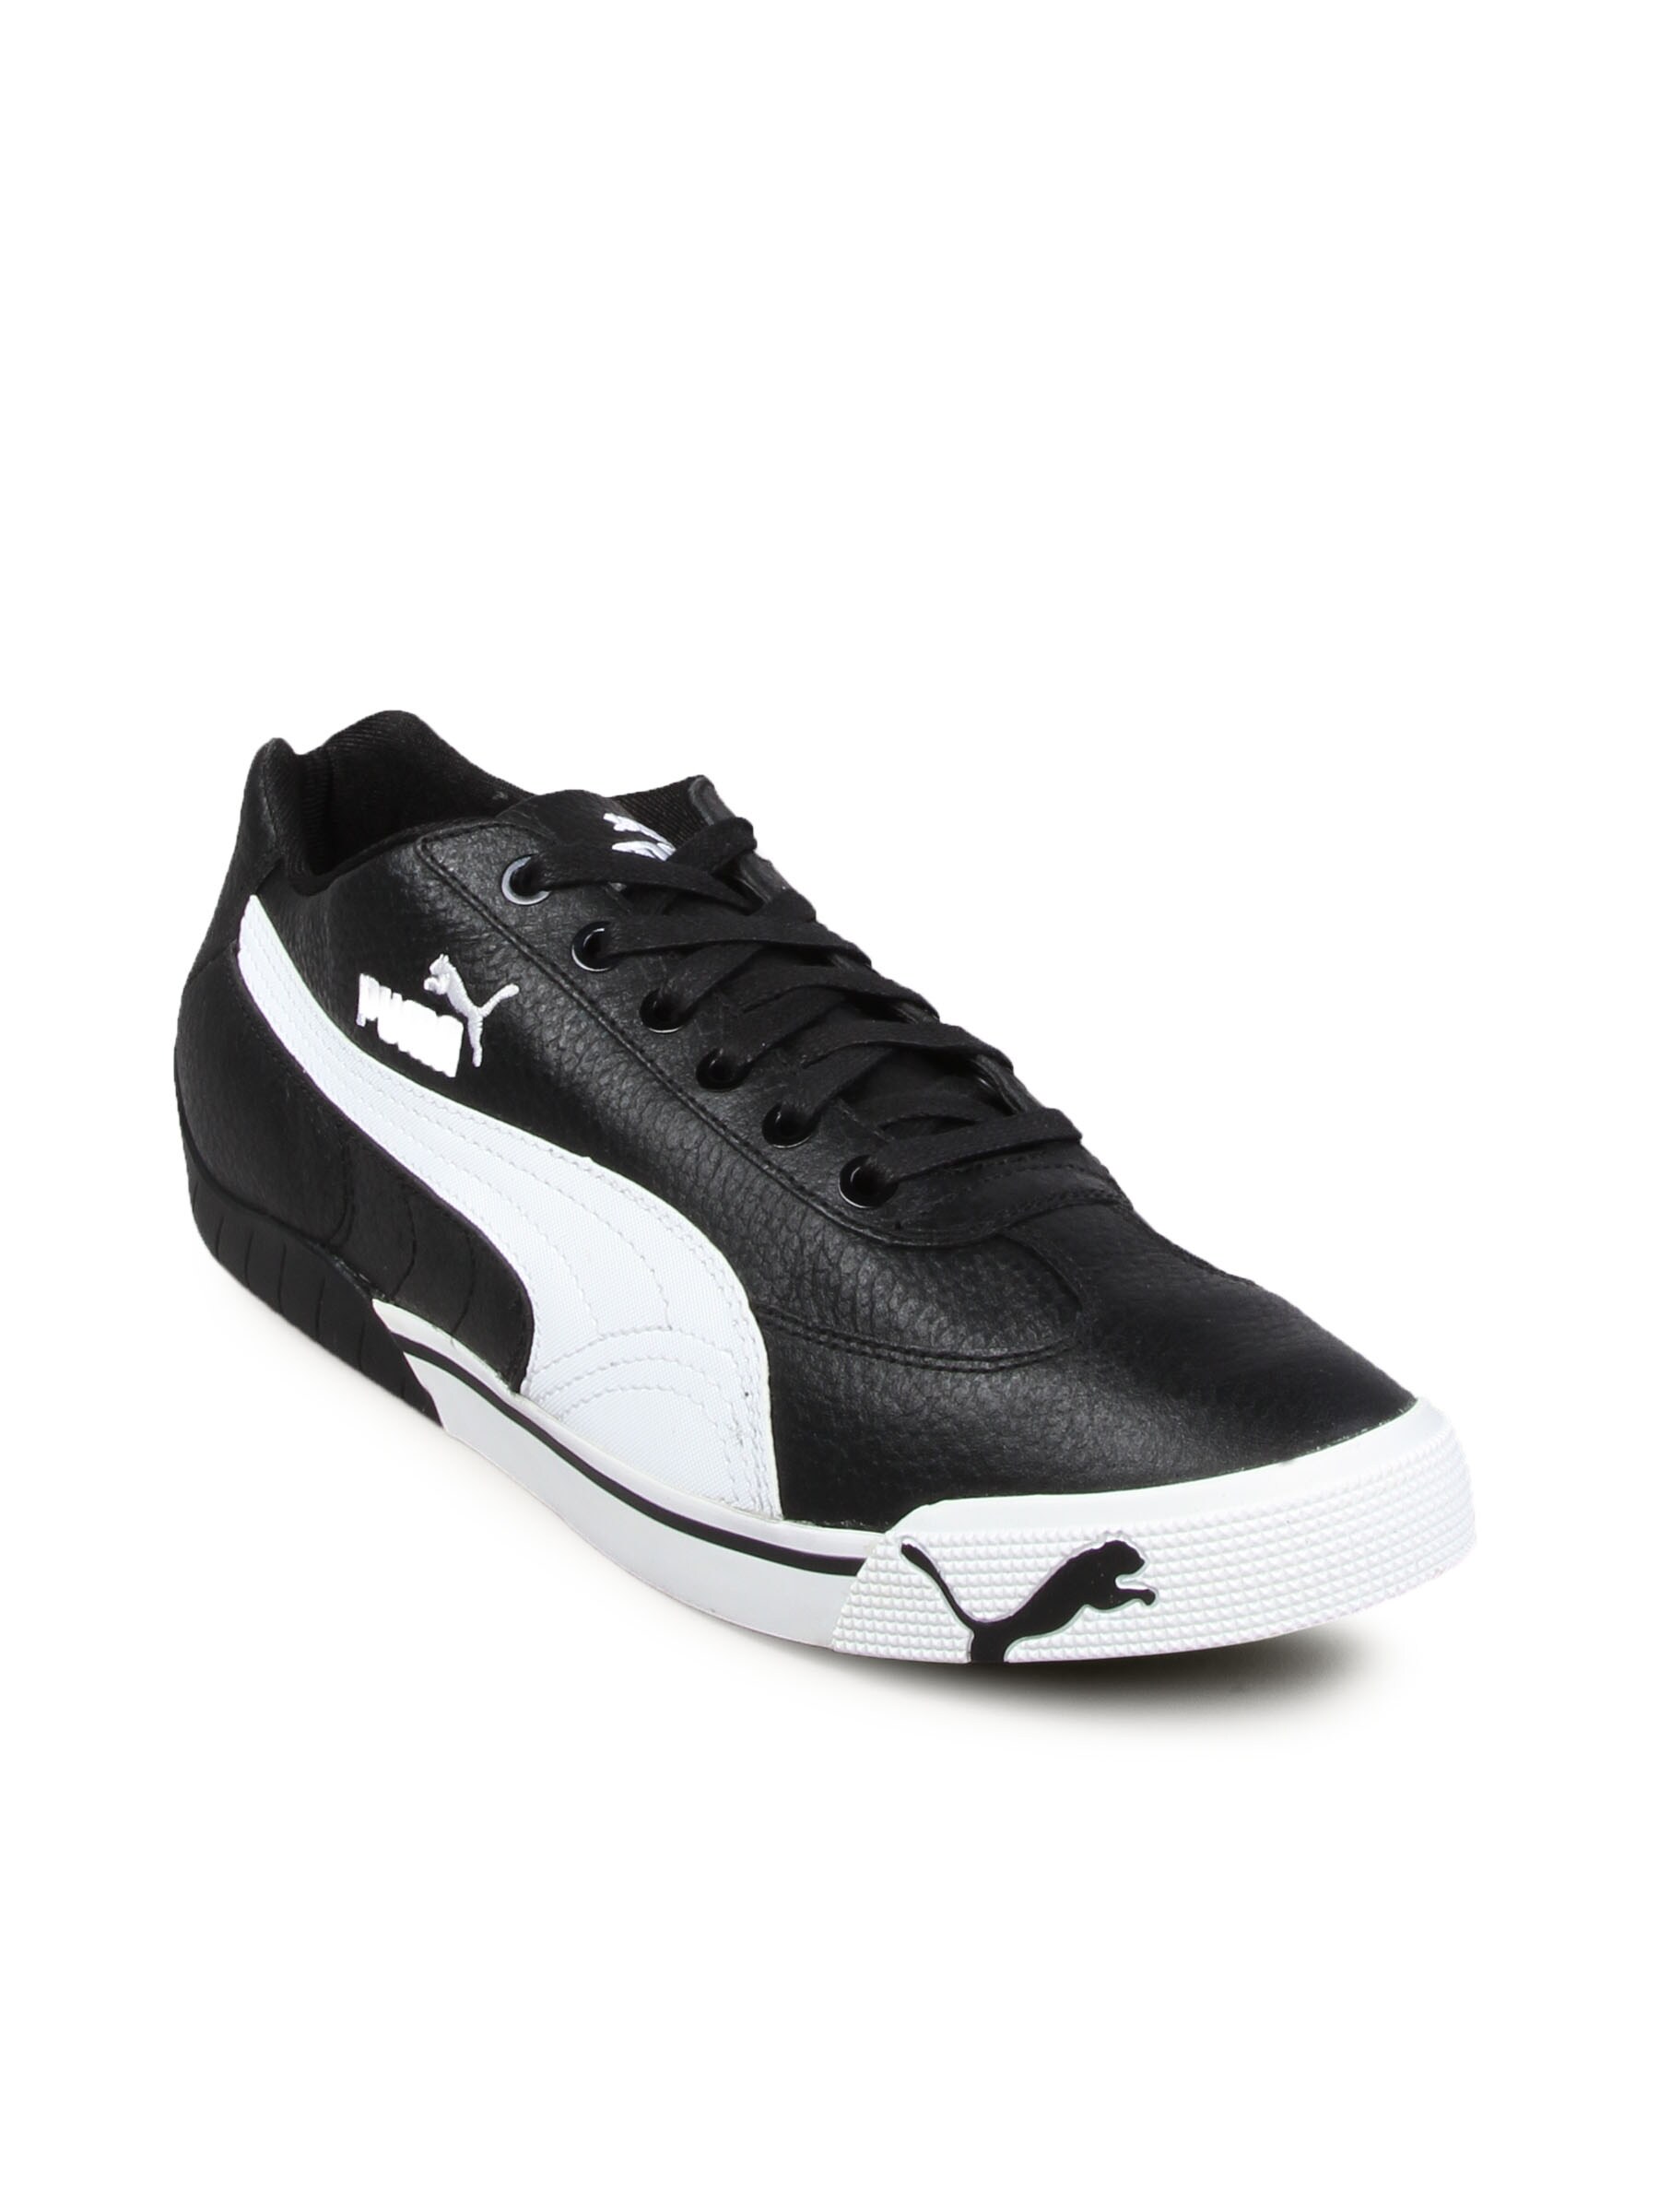 Puma Men's Speed Cat Black White Shoe